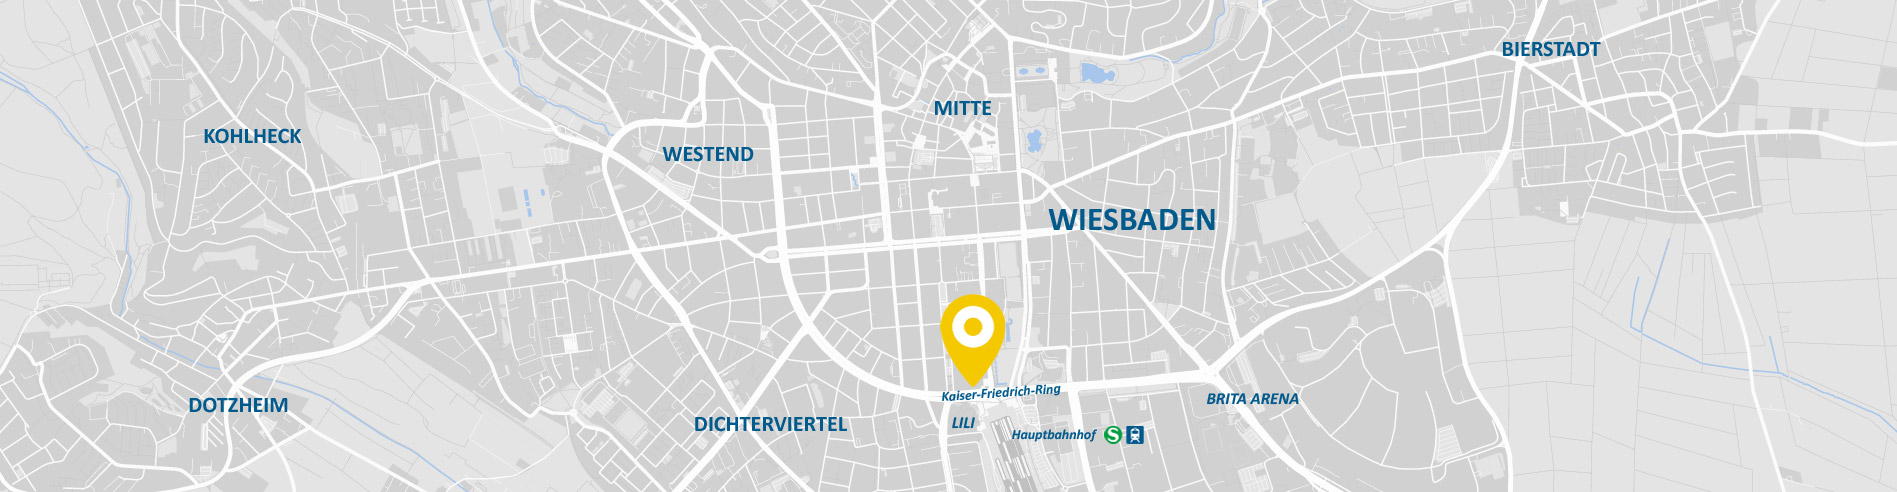 Stadtkarte AllDent Wiesbaden 